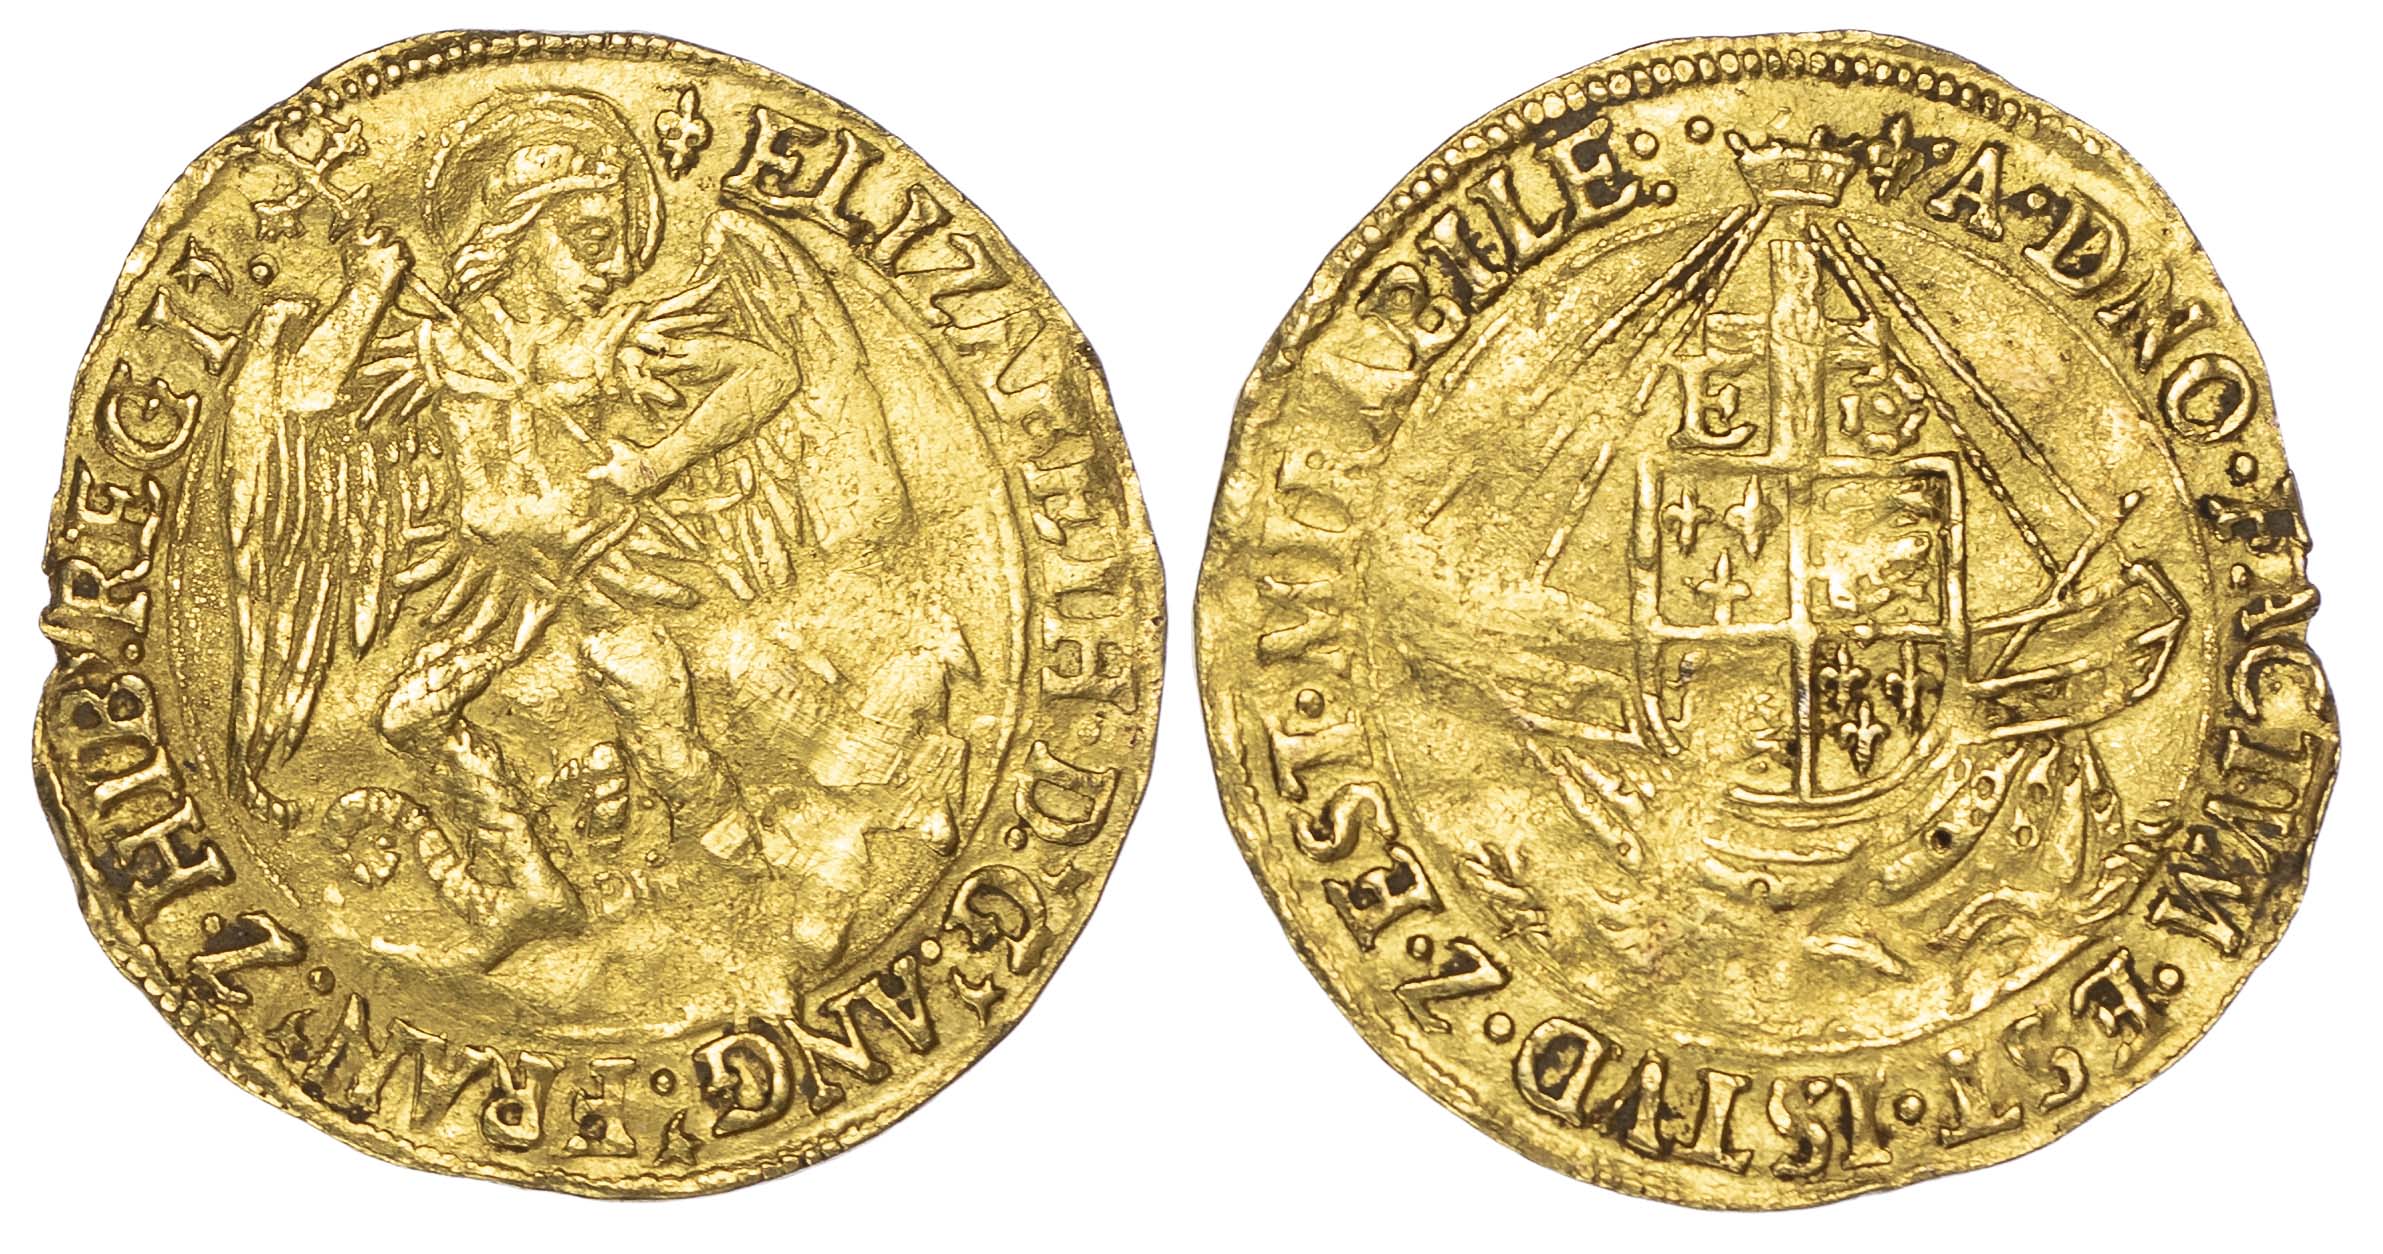 Elizabeth I (1558-1603), first issue, Angel, mintmark lis (1559-60)